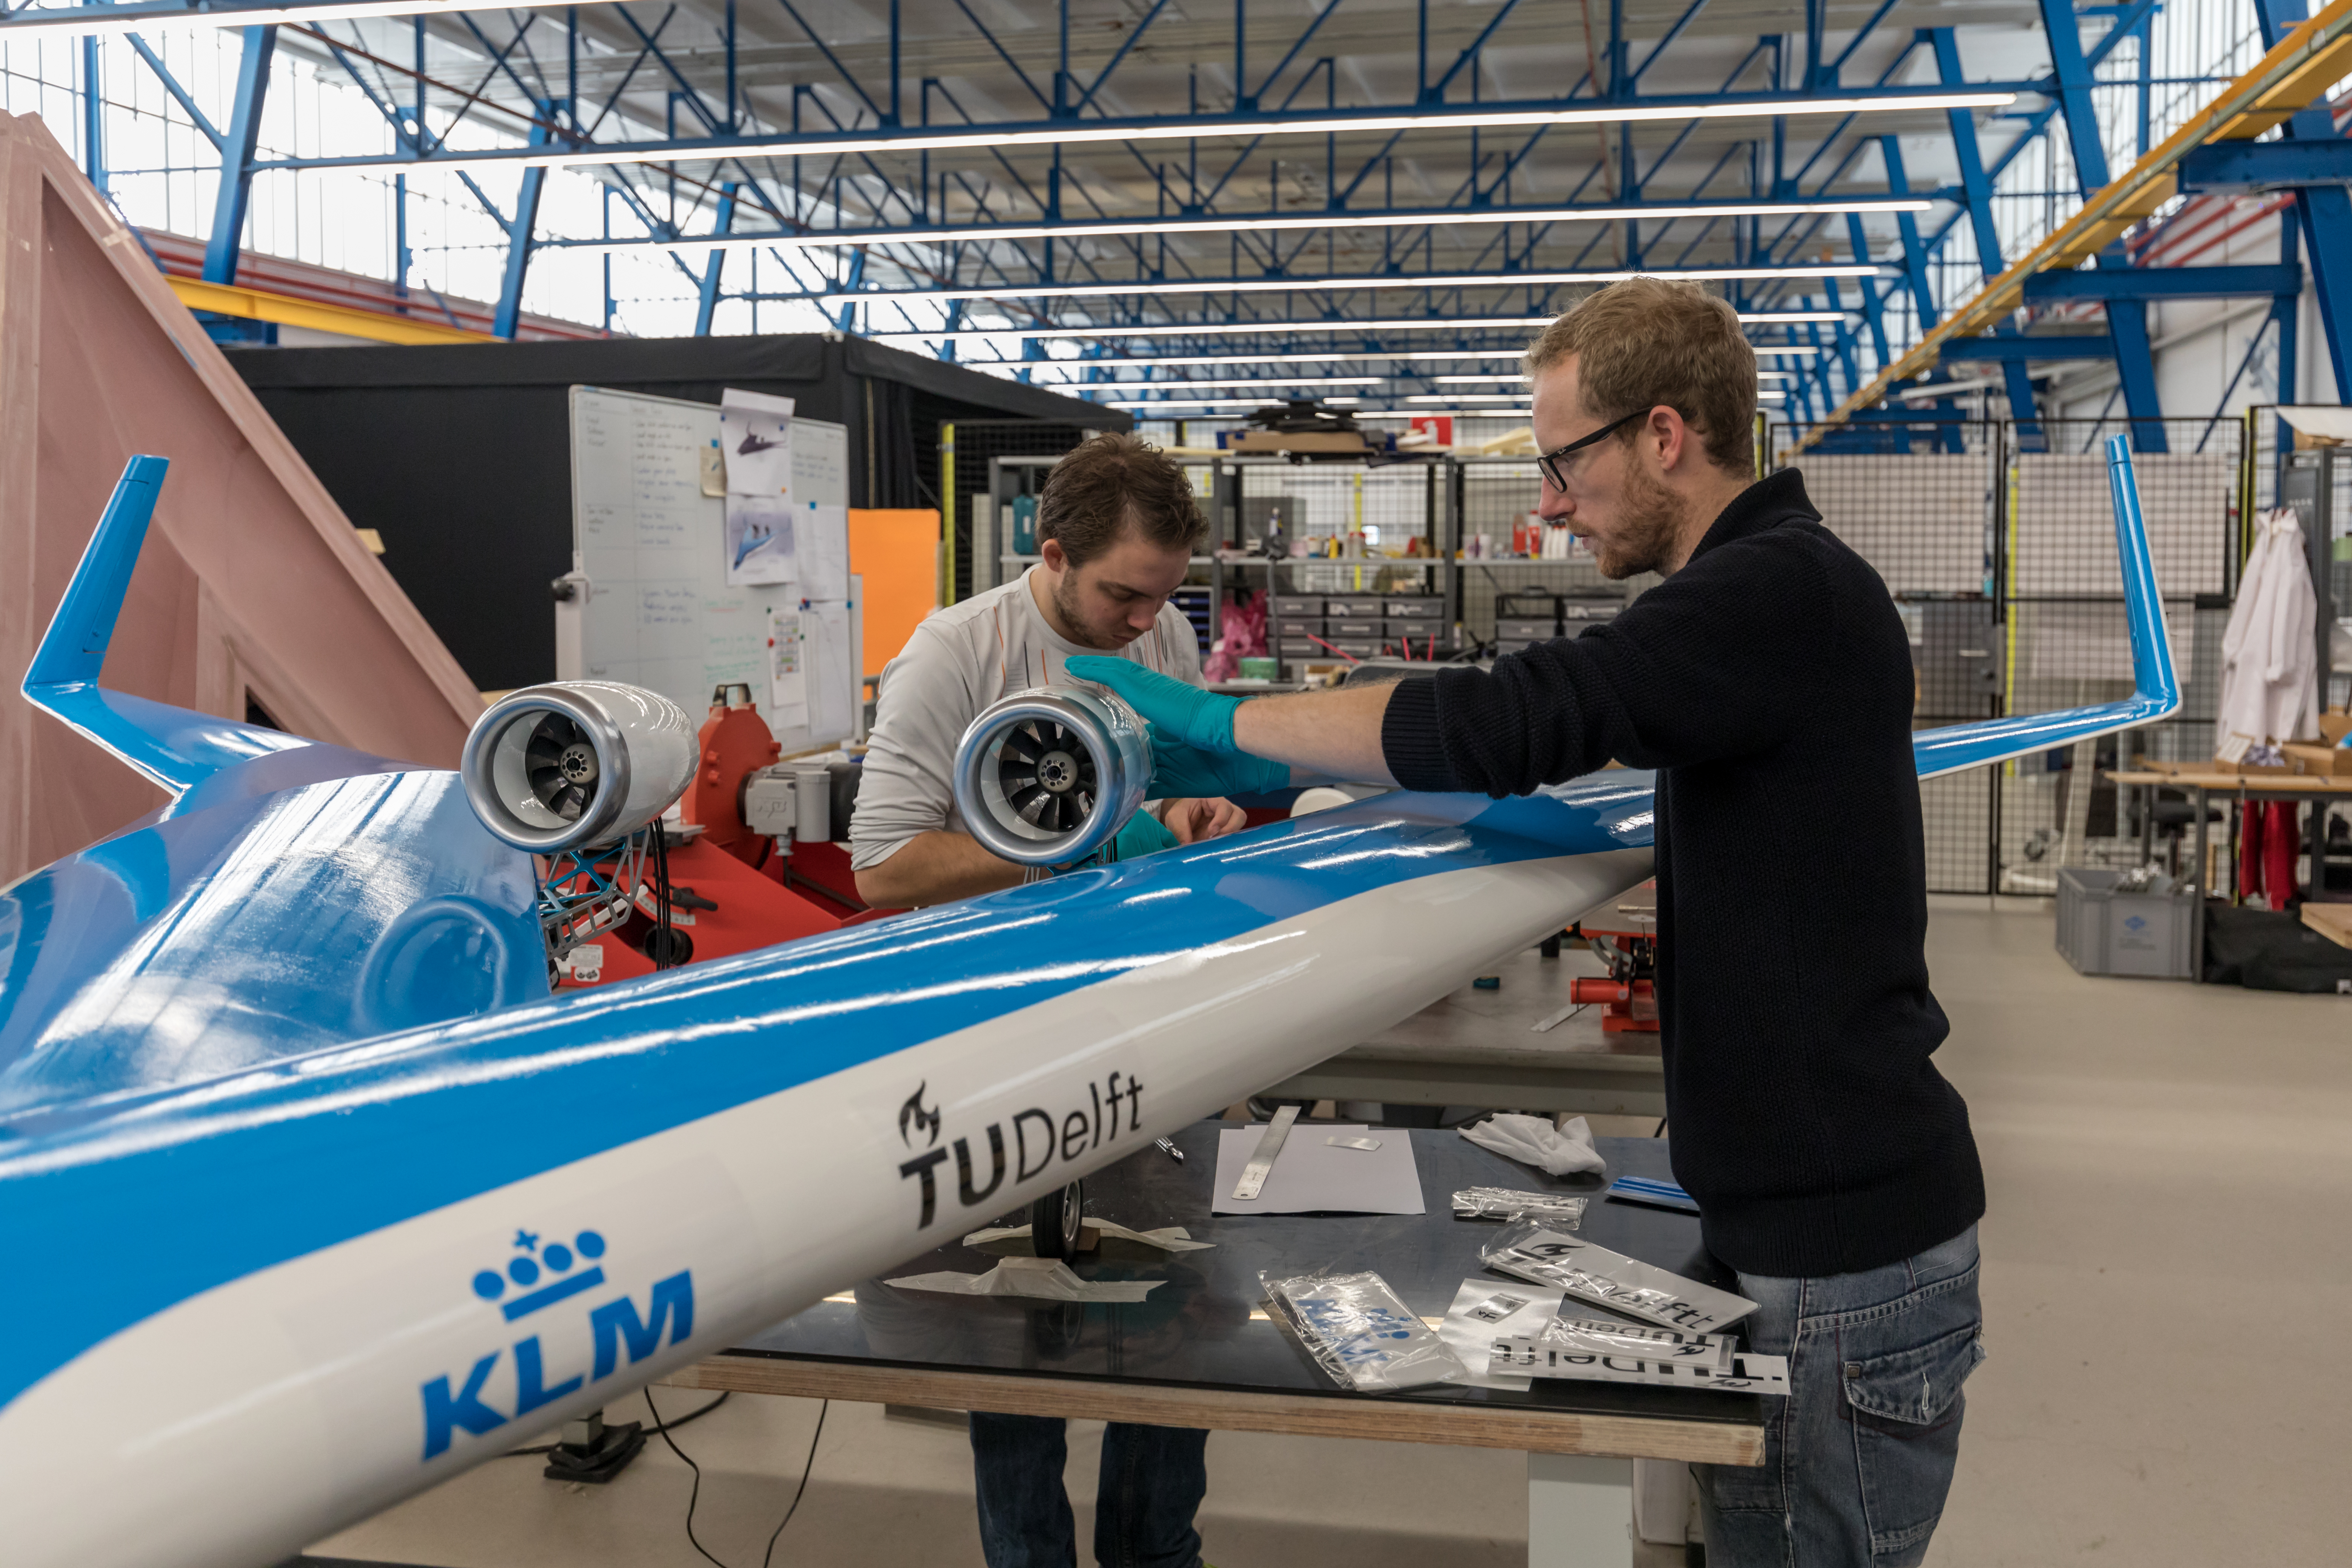 Working on the Flying-V scale model (photo: Henri Werij)